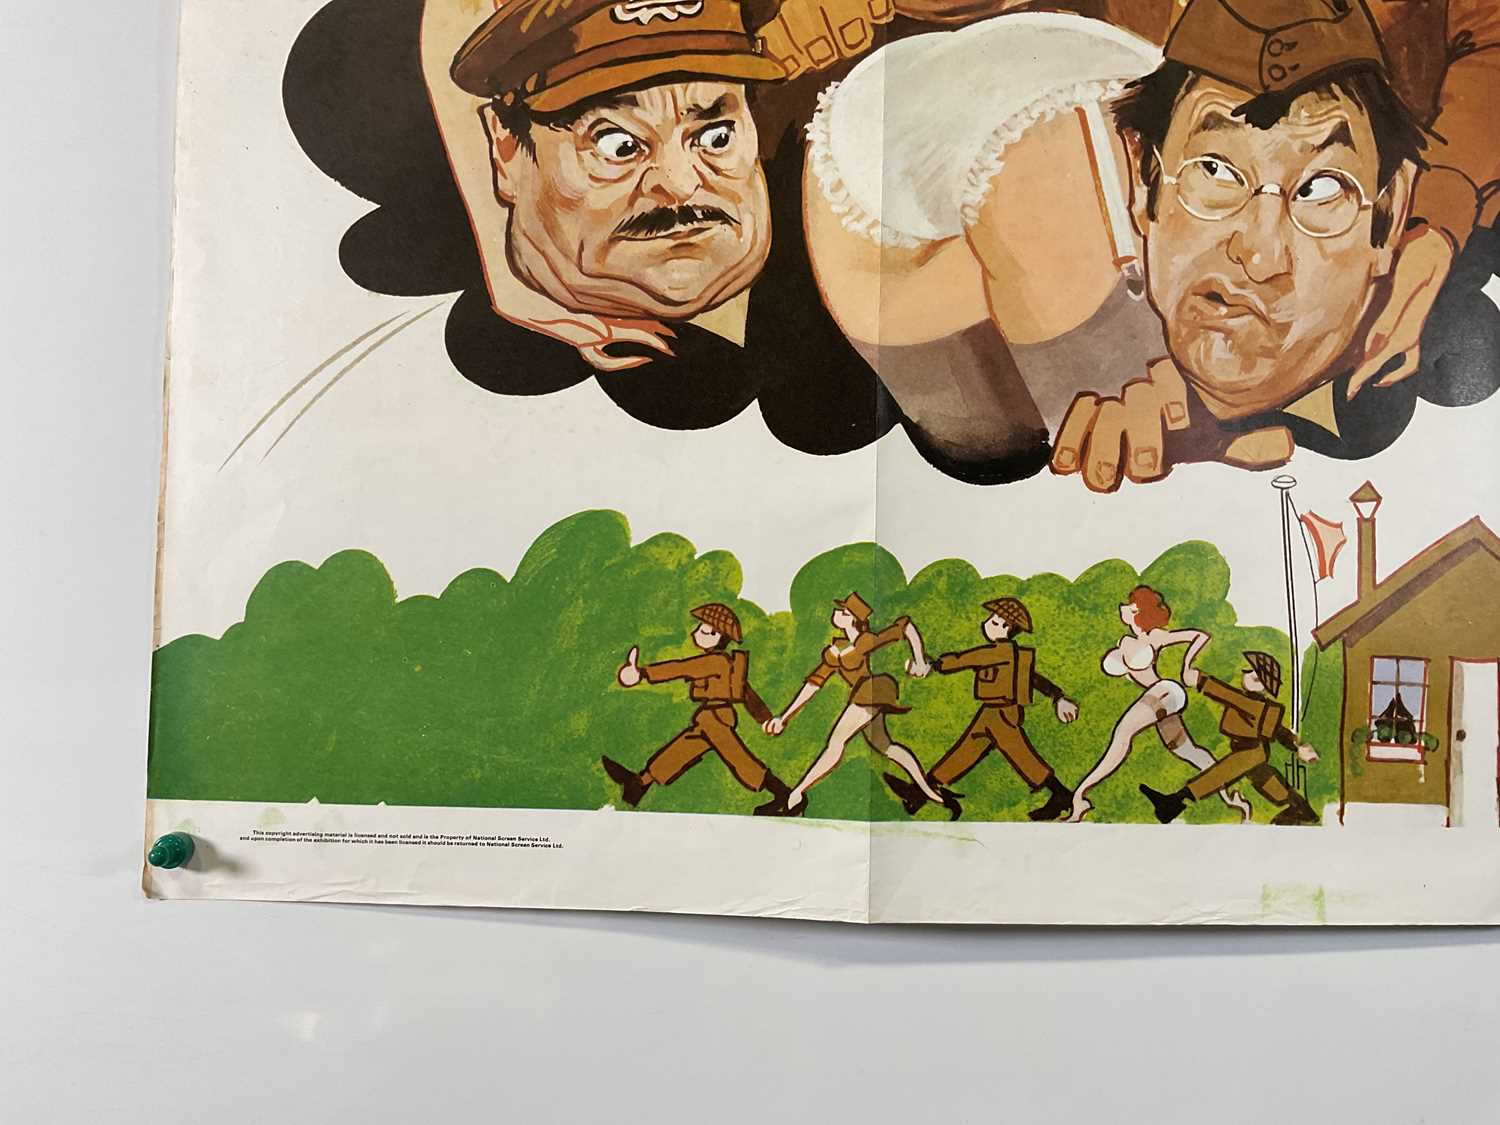 CARRY ON ENGLAND (1976) UK Quad film poster, artwork by Arnaldo Putzu, folded. - Image 4 of 6